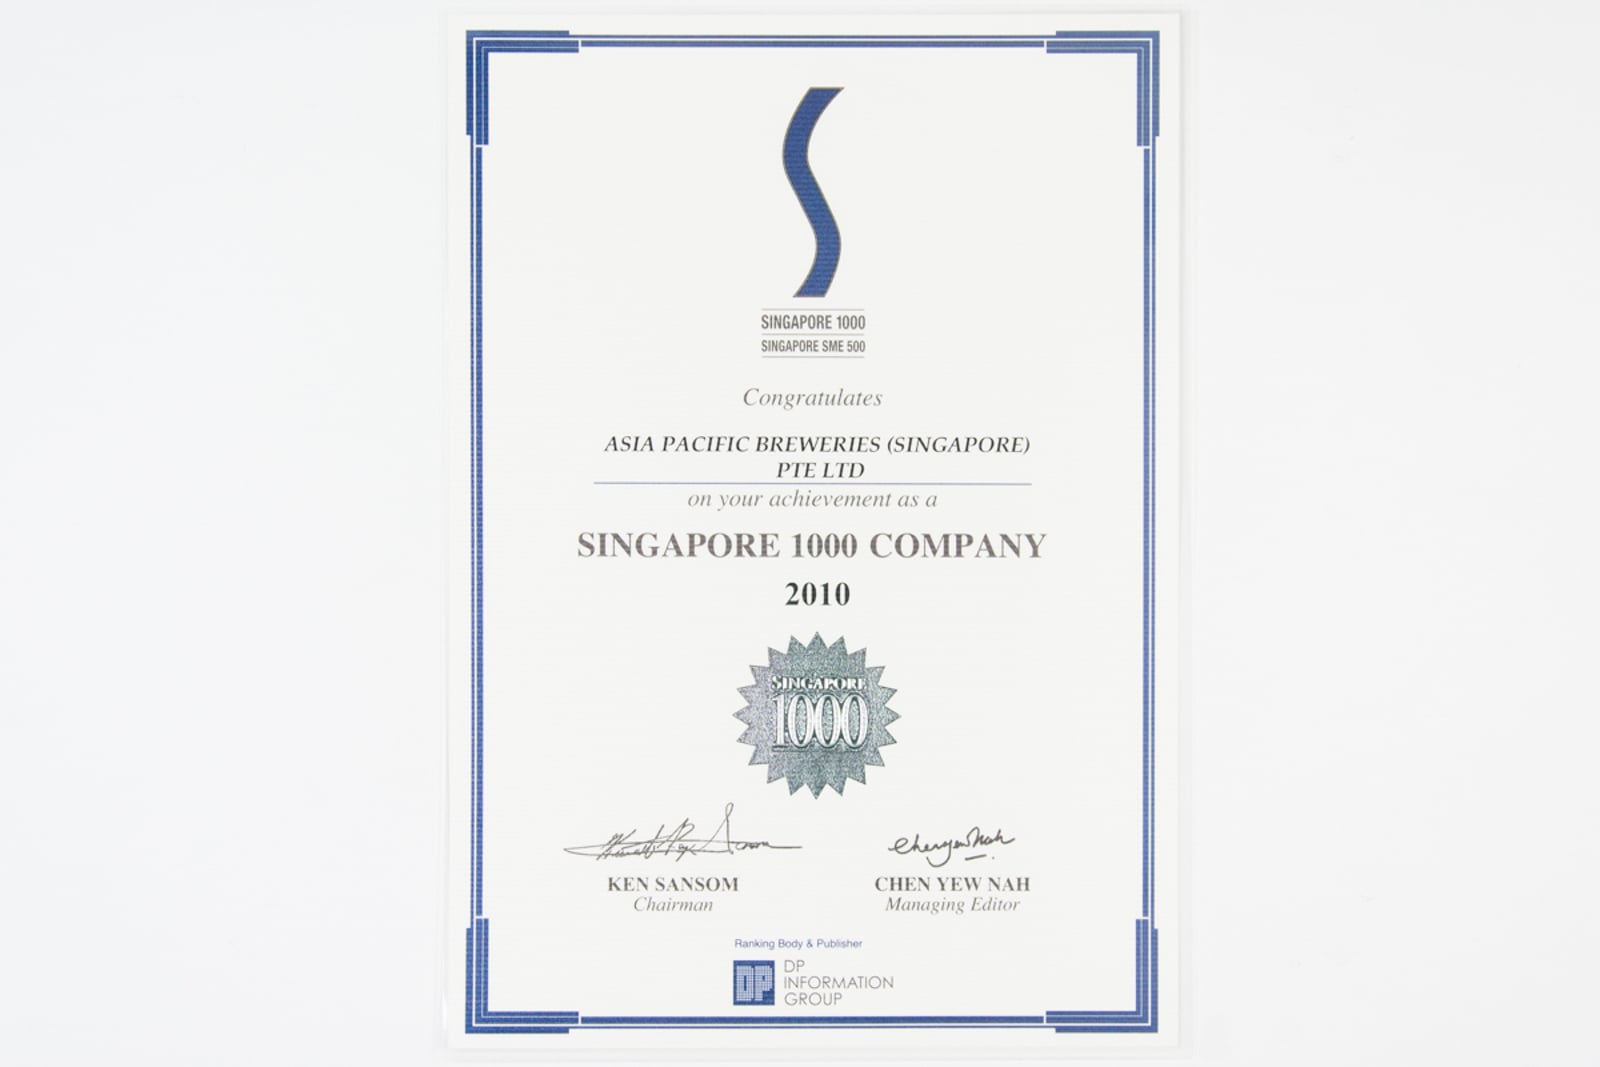 APBS Singapore, Singapore 1000 Company, DP Information Network Certificate 2010